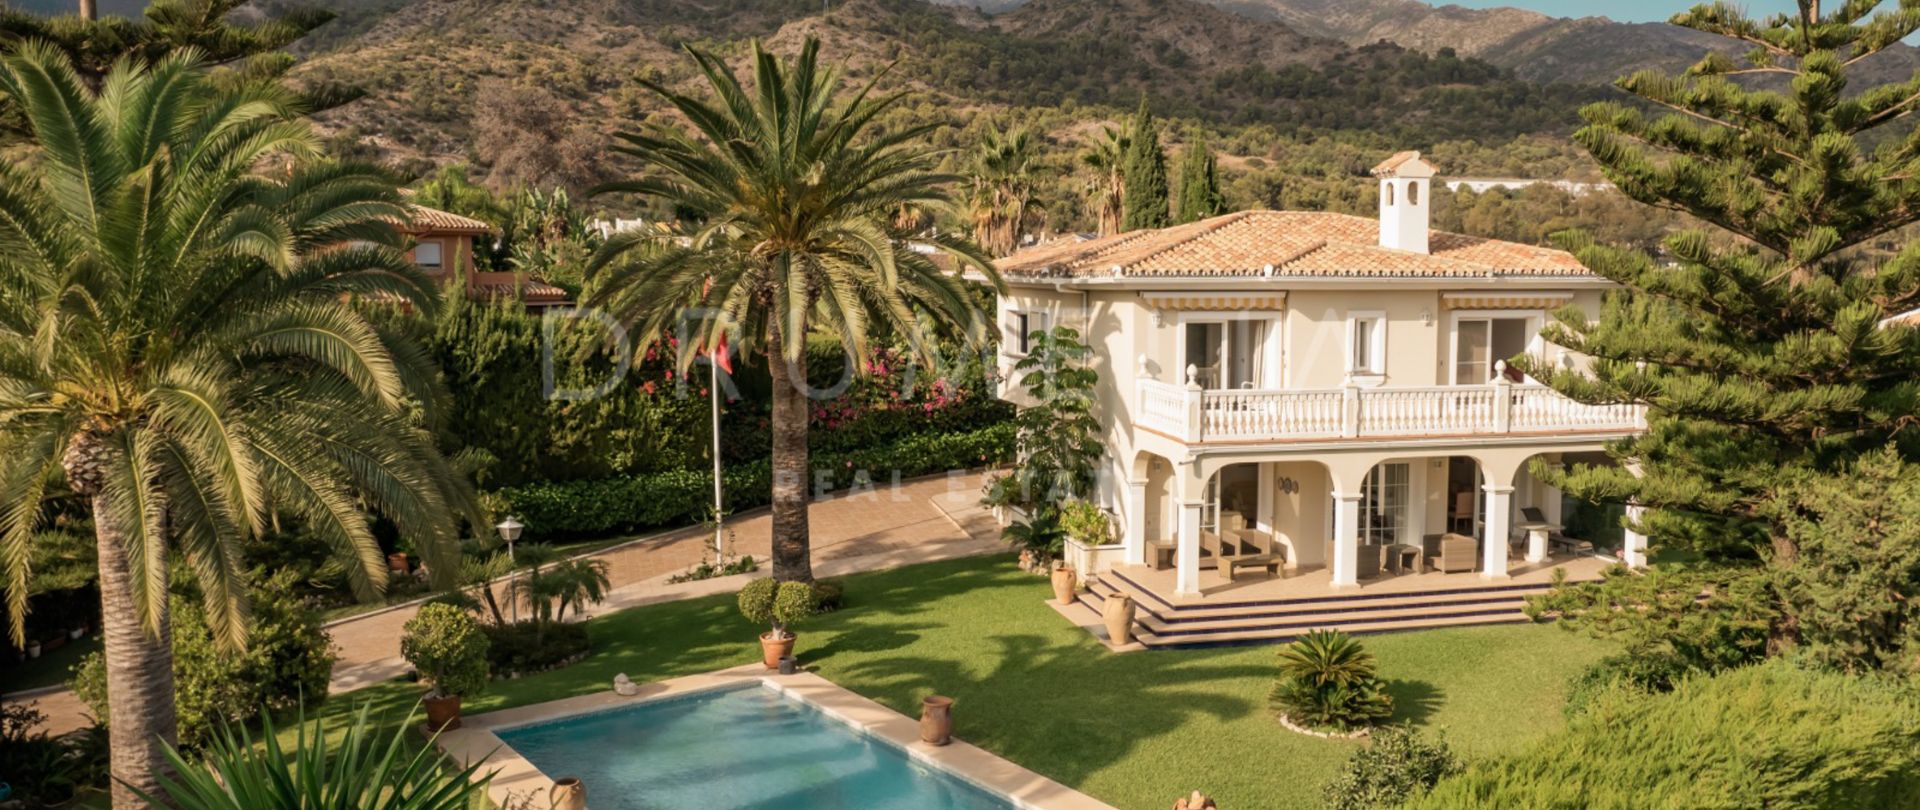 Villa for salg i Marbella by, Marbella (Alle)